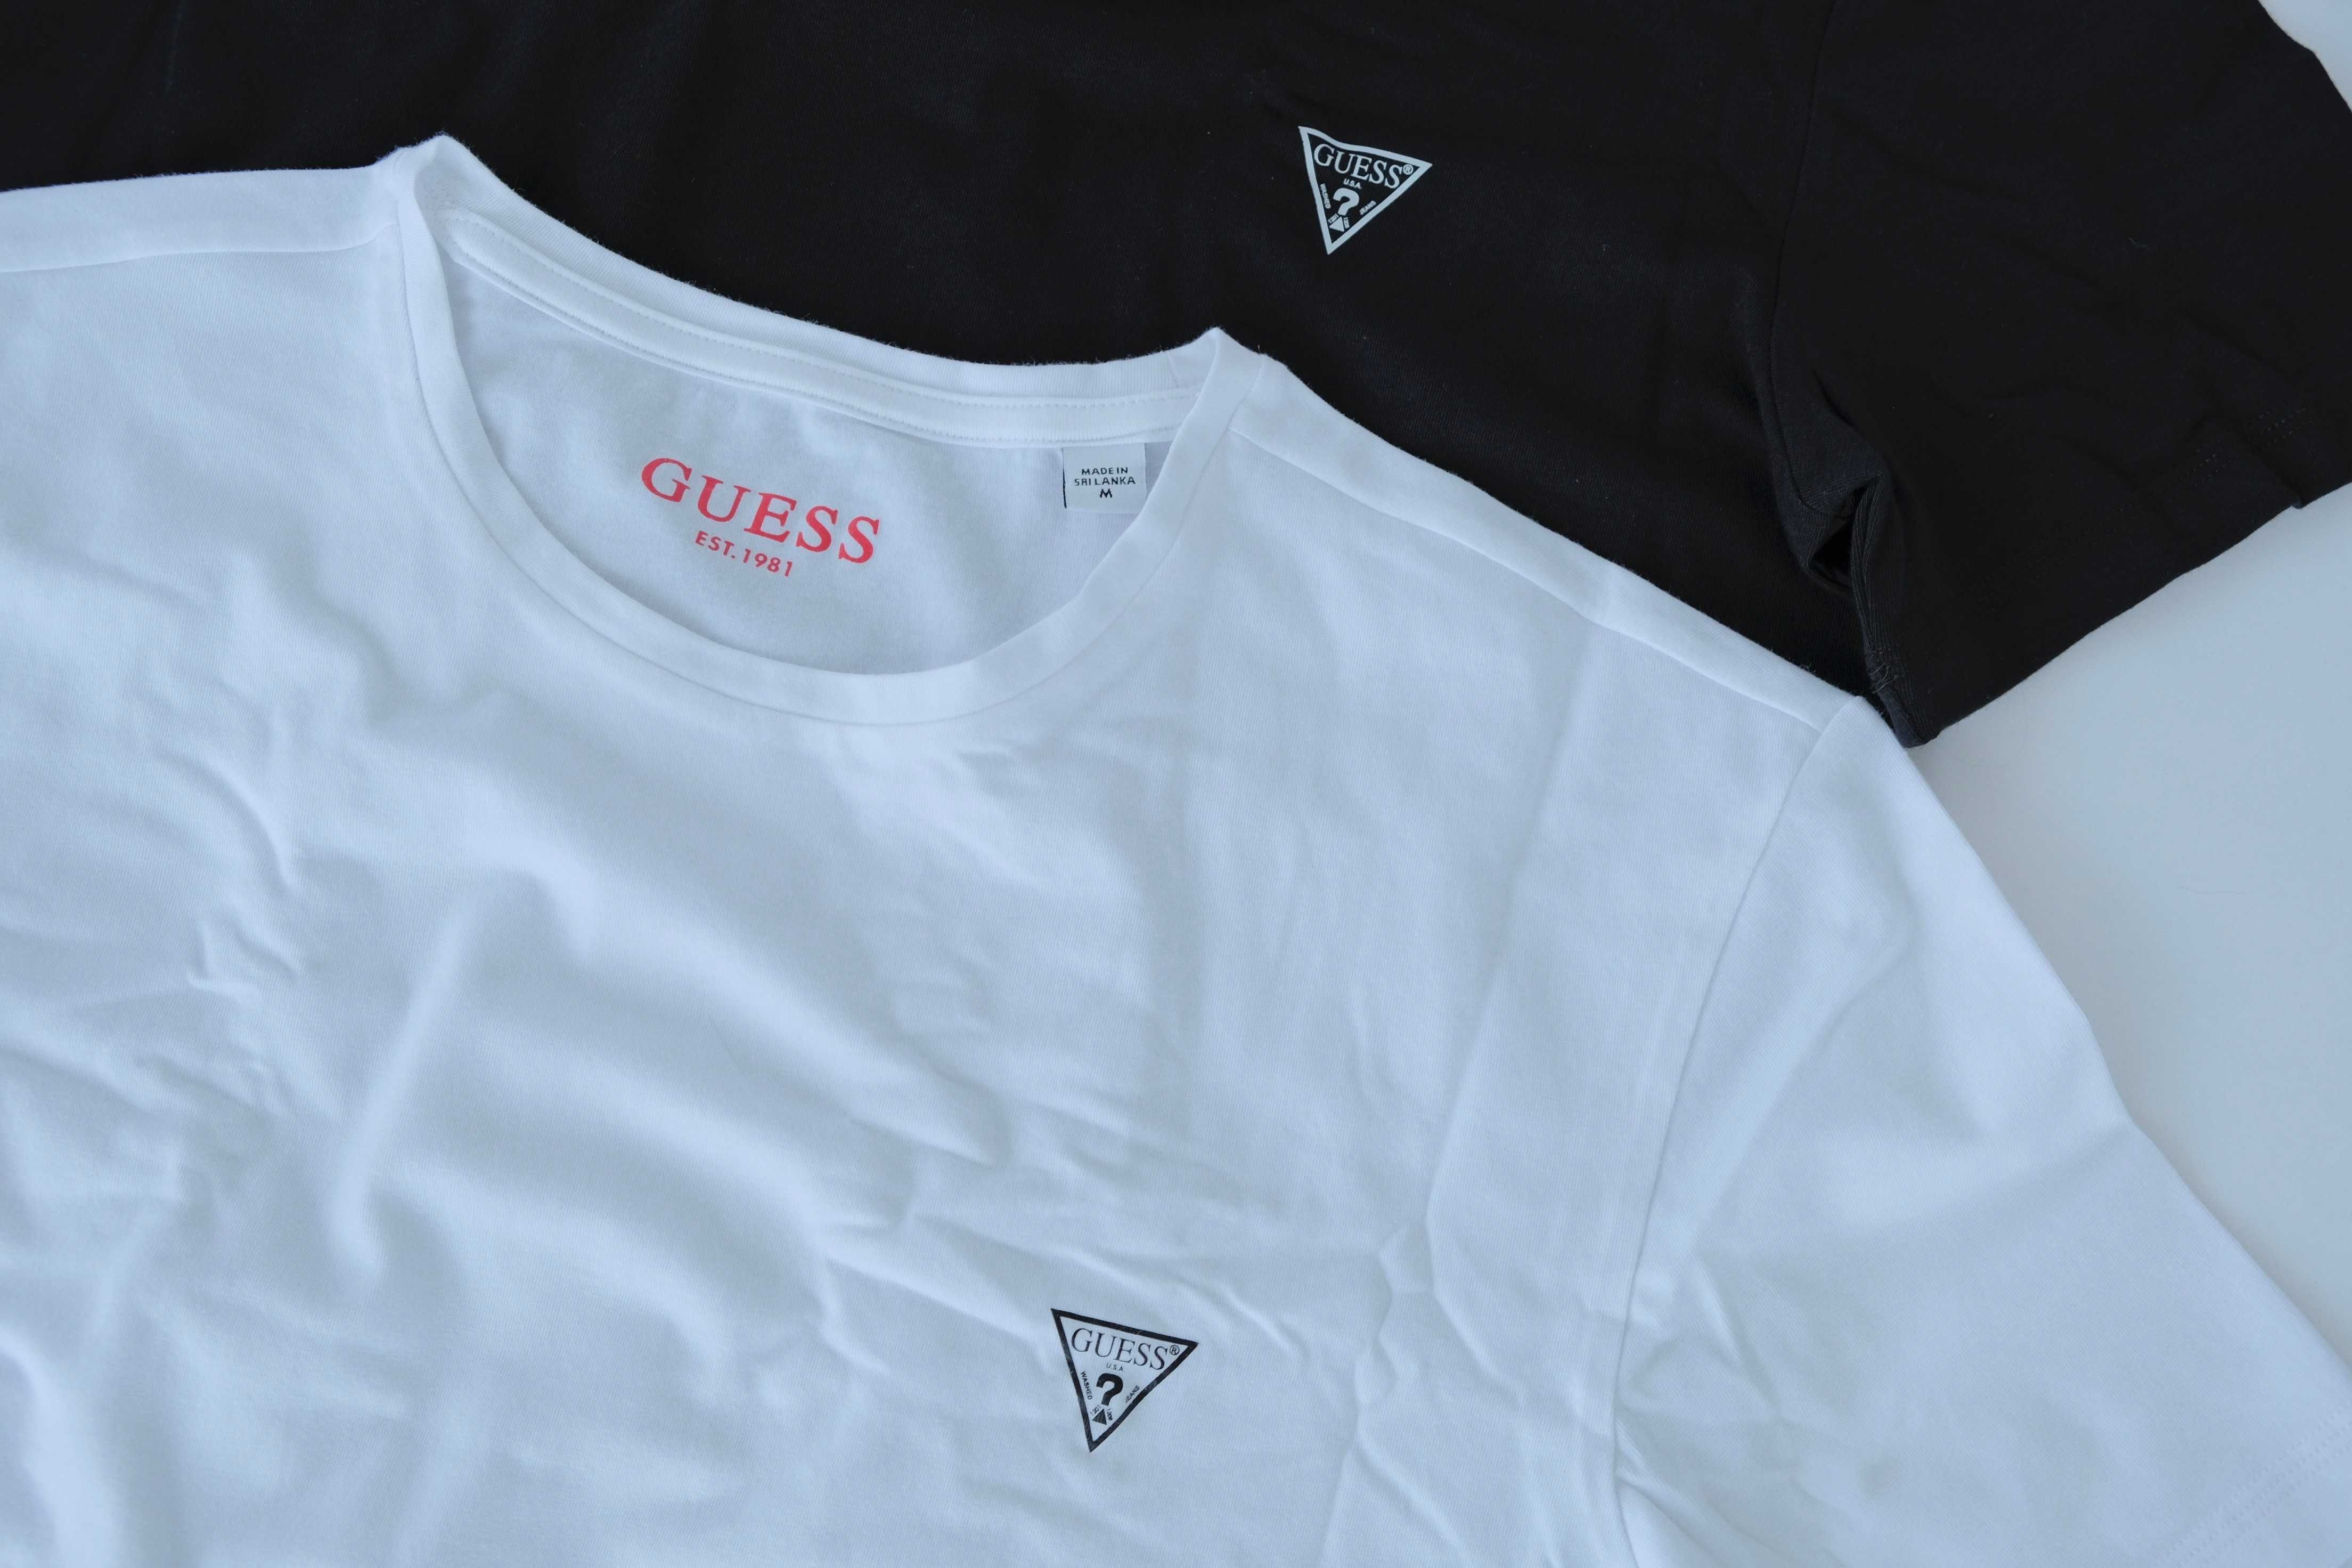 ПРОМО GUESS-S/M/L/XL/XXL-2 броя комплект  мъжки тениски бяло/черно